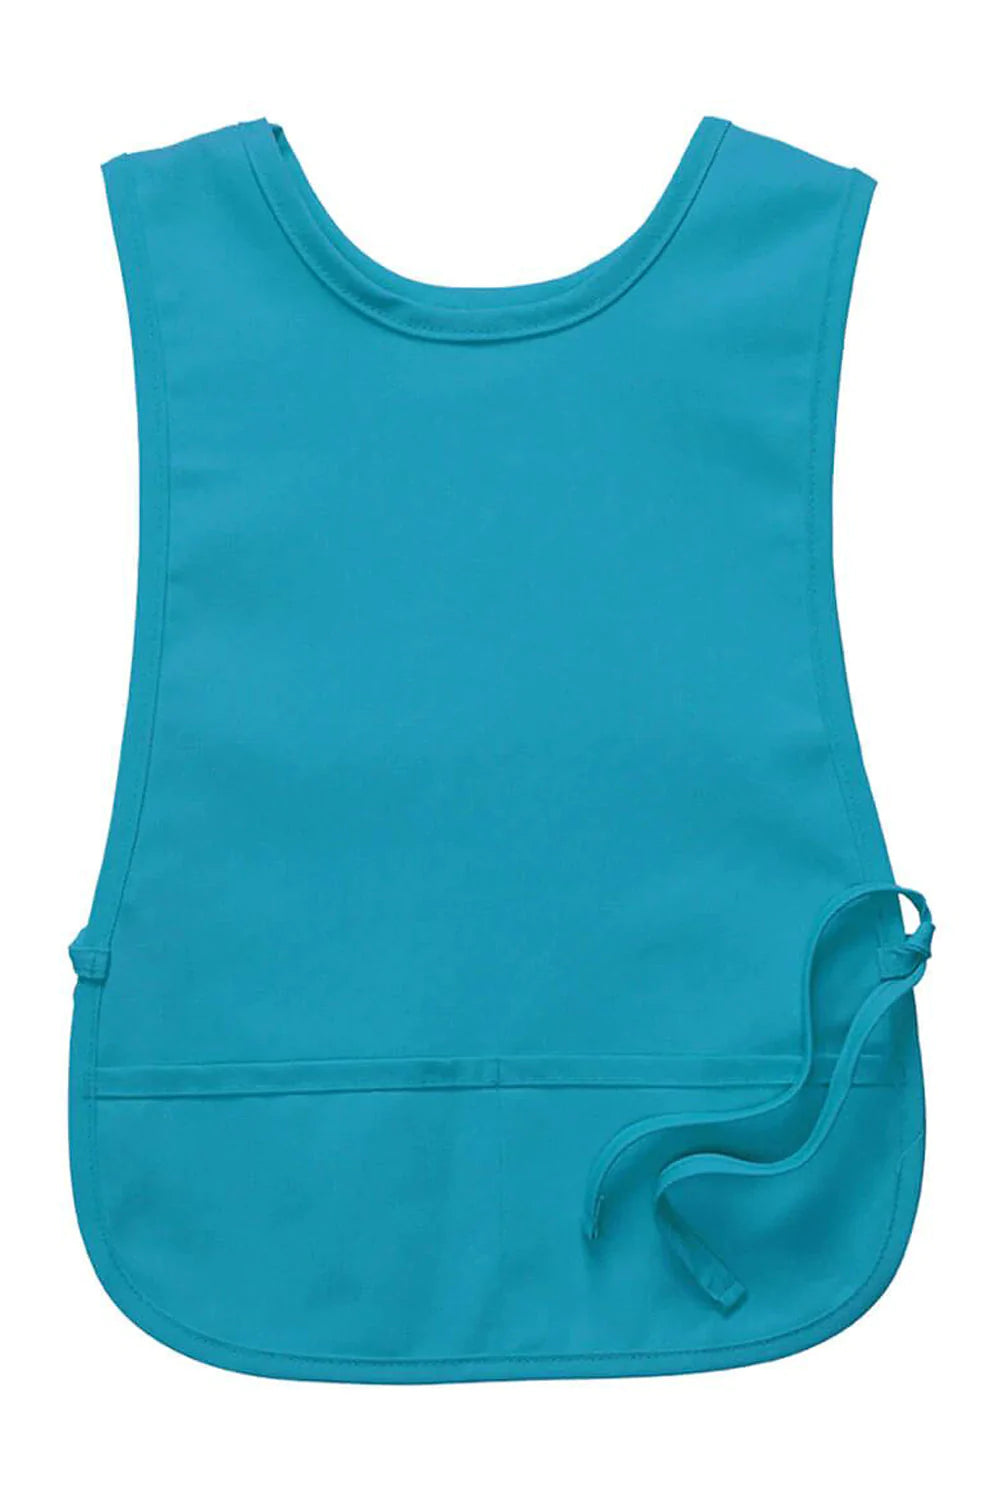 Cardi / DayStar Turquoise Kid's XL Cobbler Apron (2 Pockets)